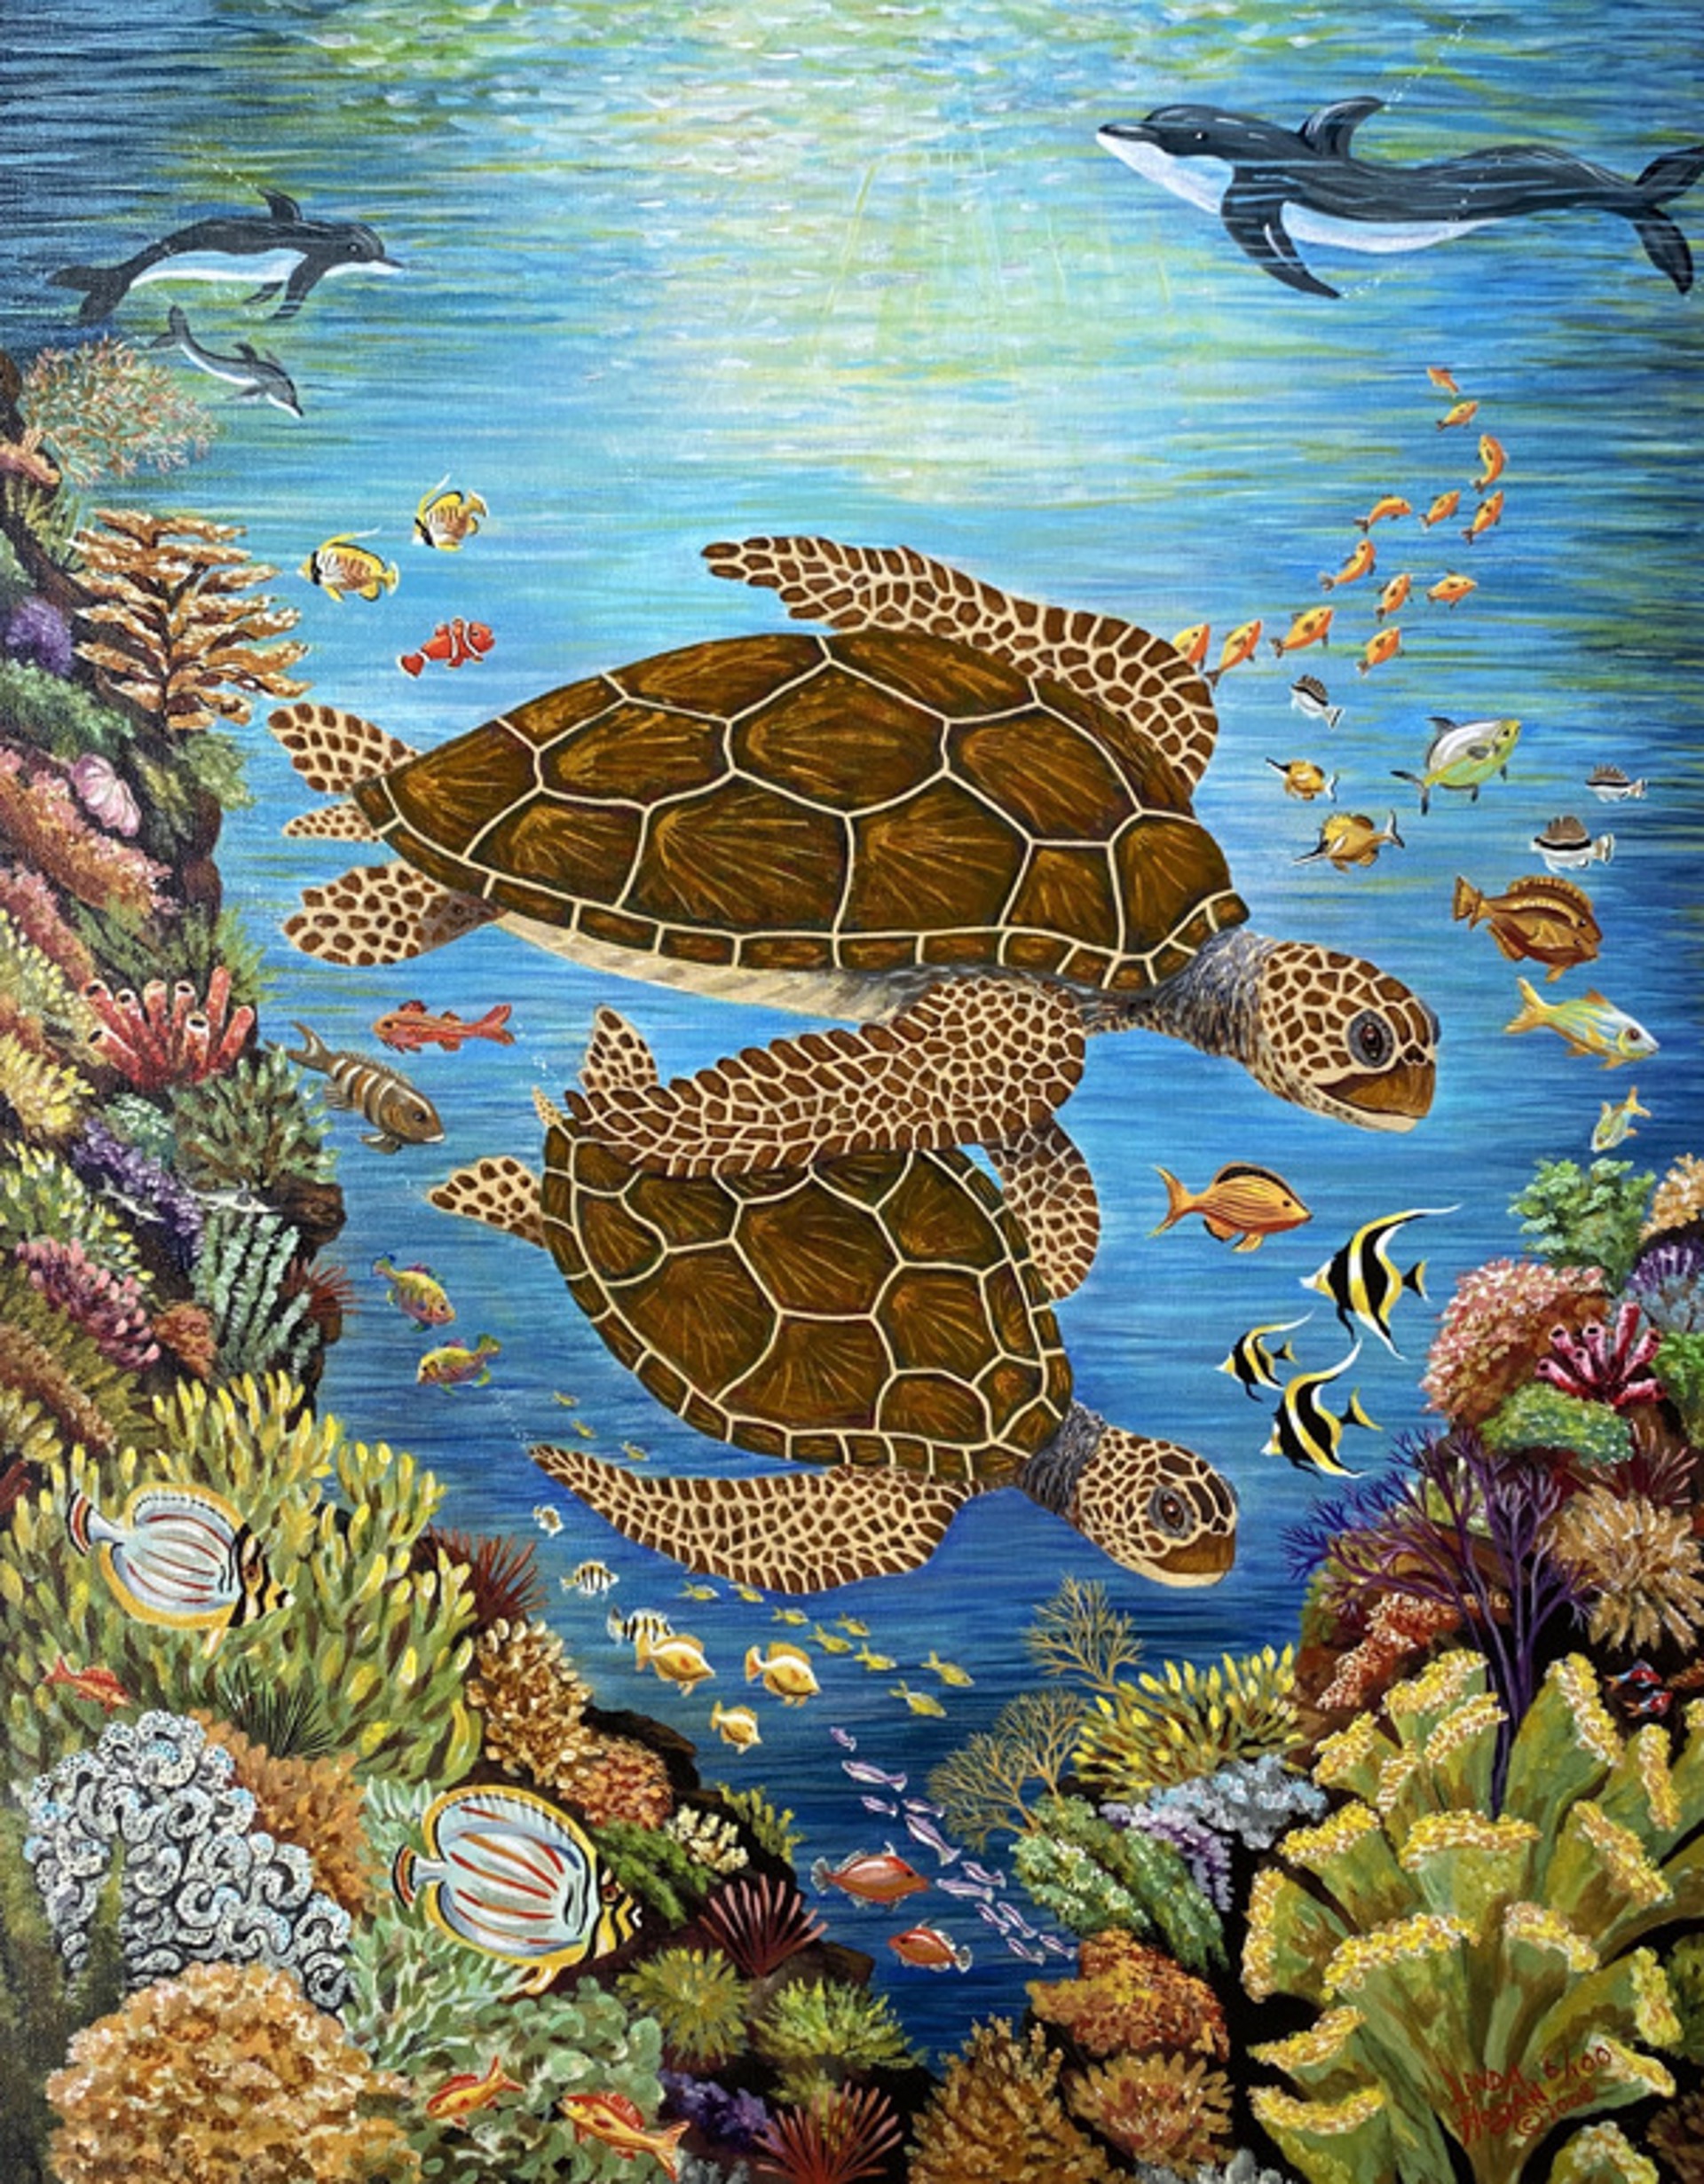 Save the Reef Save the Turtles by Linda Hogan